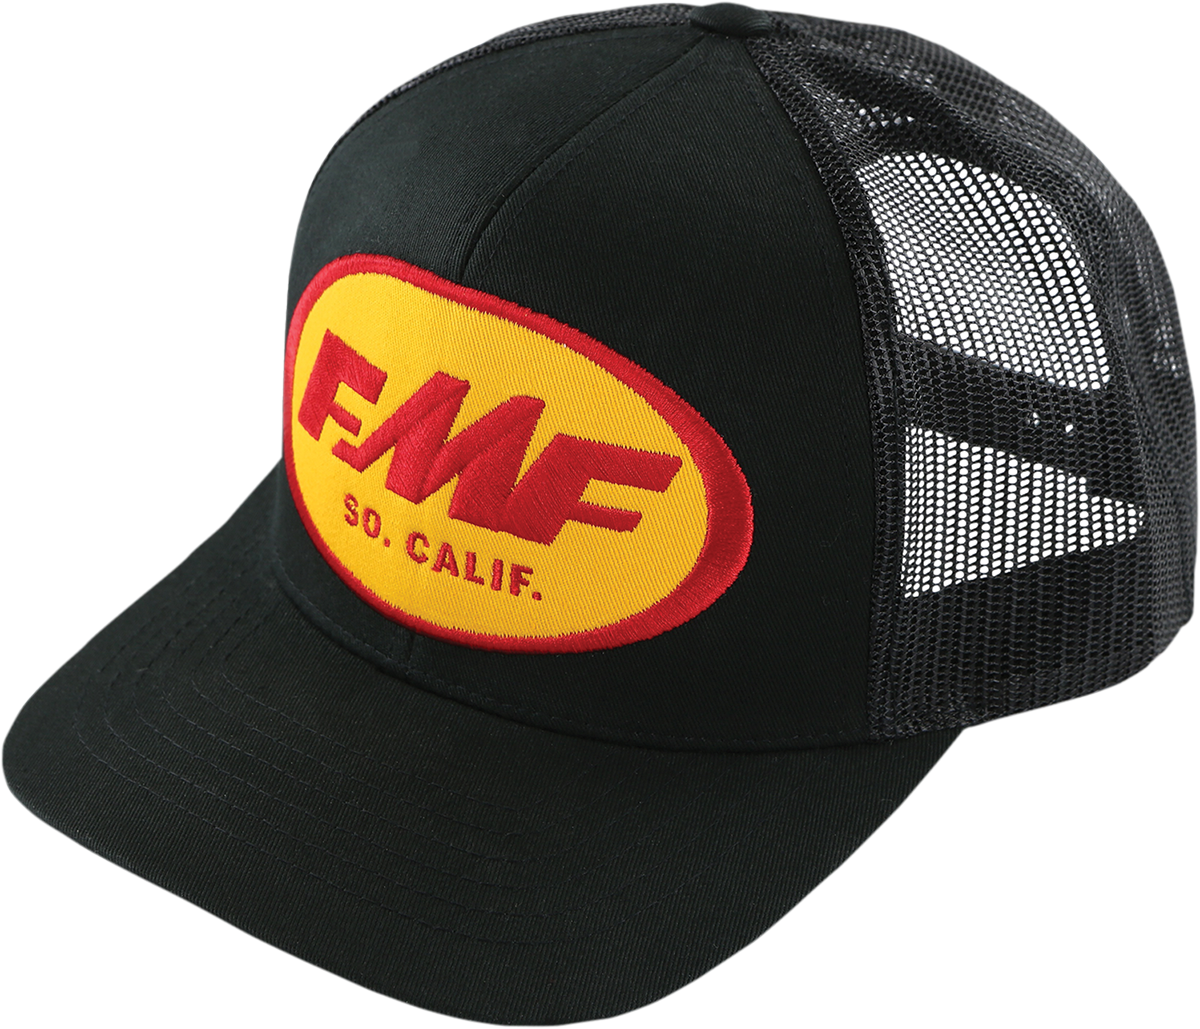 FMF Origins 2 Hat - Black - One Size Fits Most SP21196908BLK2 2501-3666